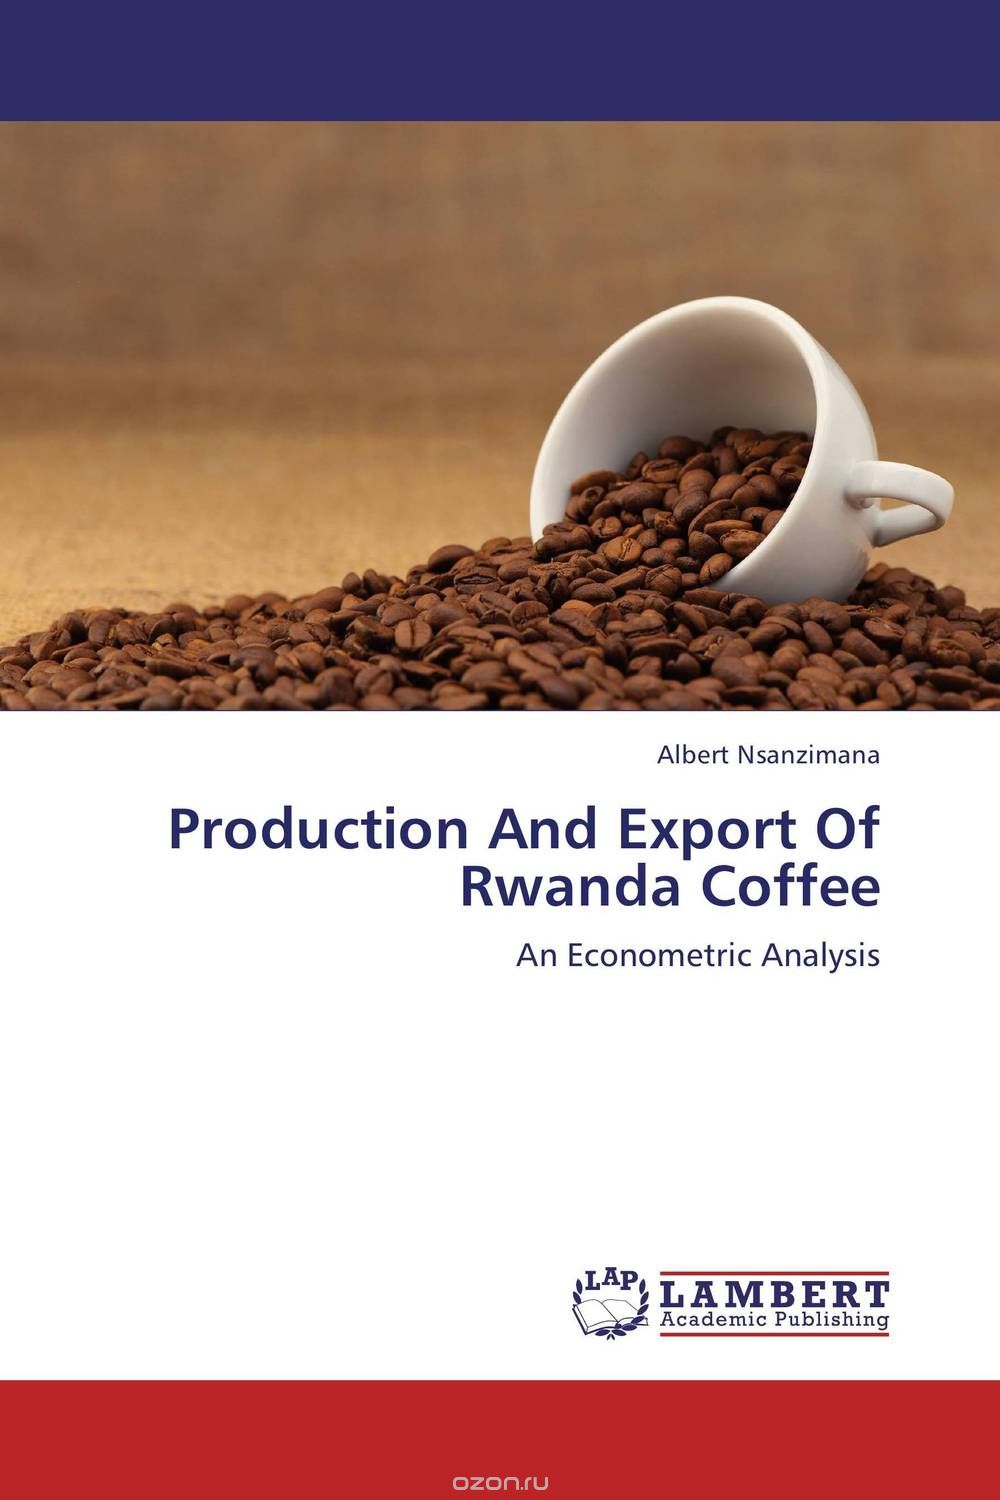 Скачать книгу "Production And Export Of Rwanda Coffee"